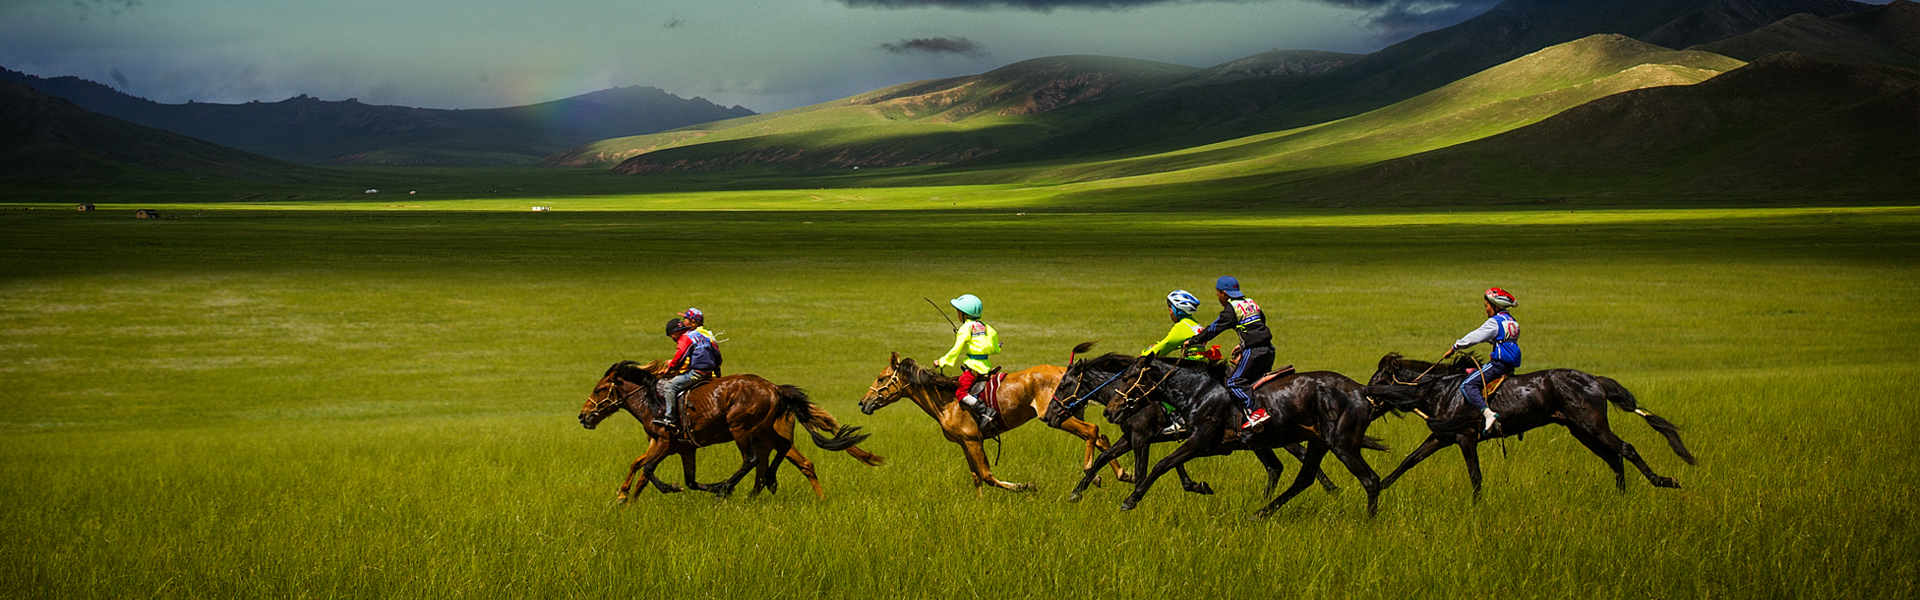 Classic_Mongolia_photography_tour